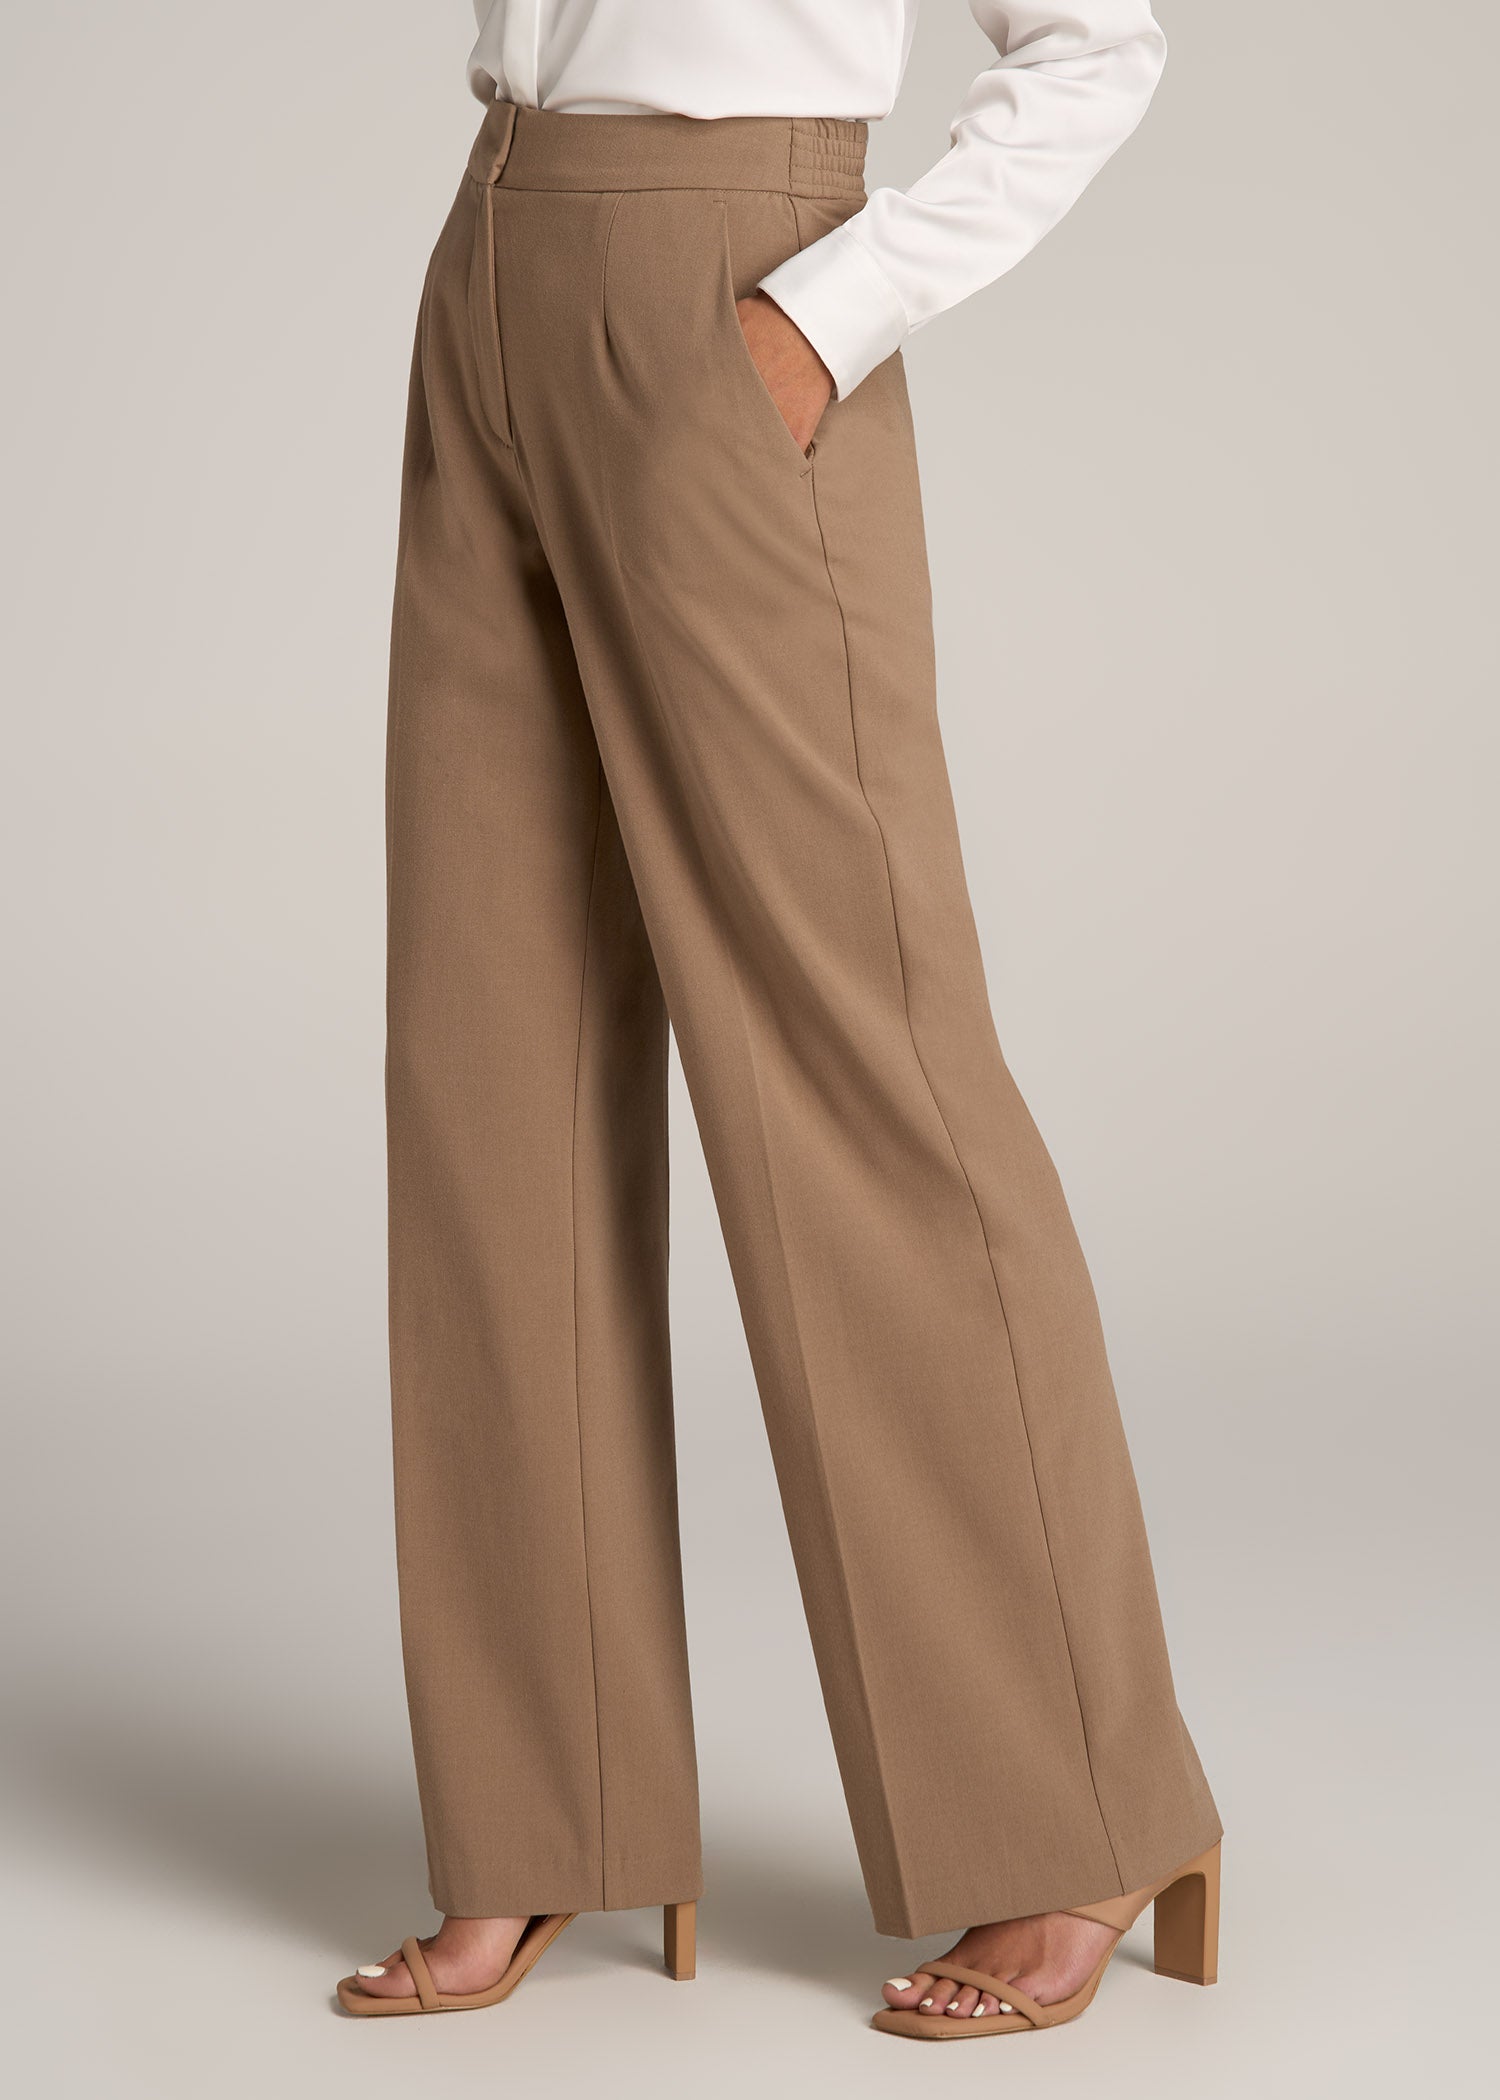 Womens High Waist Wide Leg Pants Ladies Casual Slacks Button Palazzo  Bottoms US | eBay